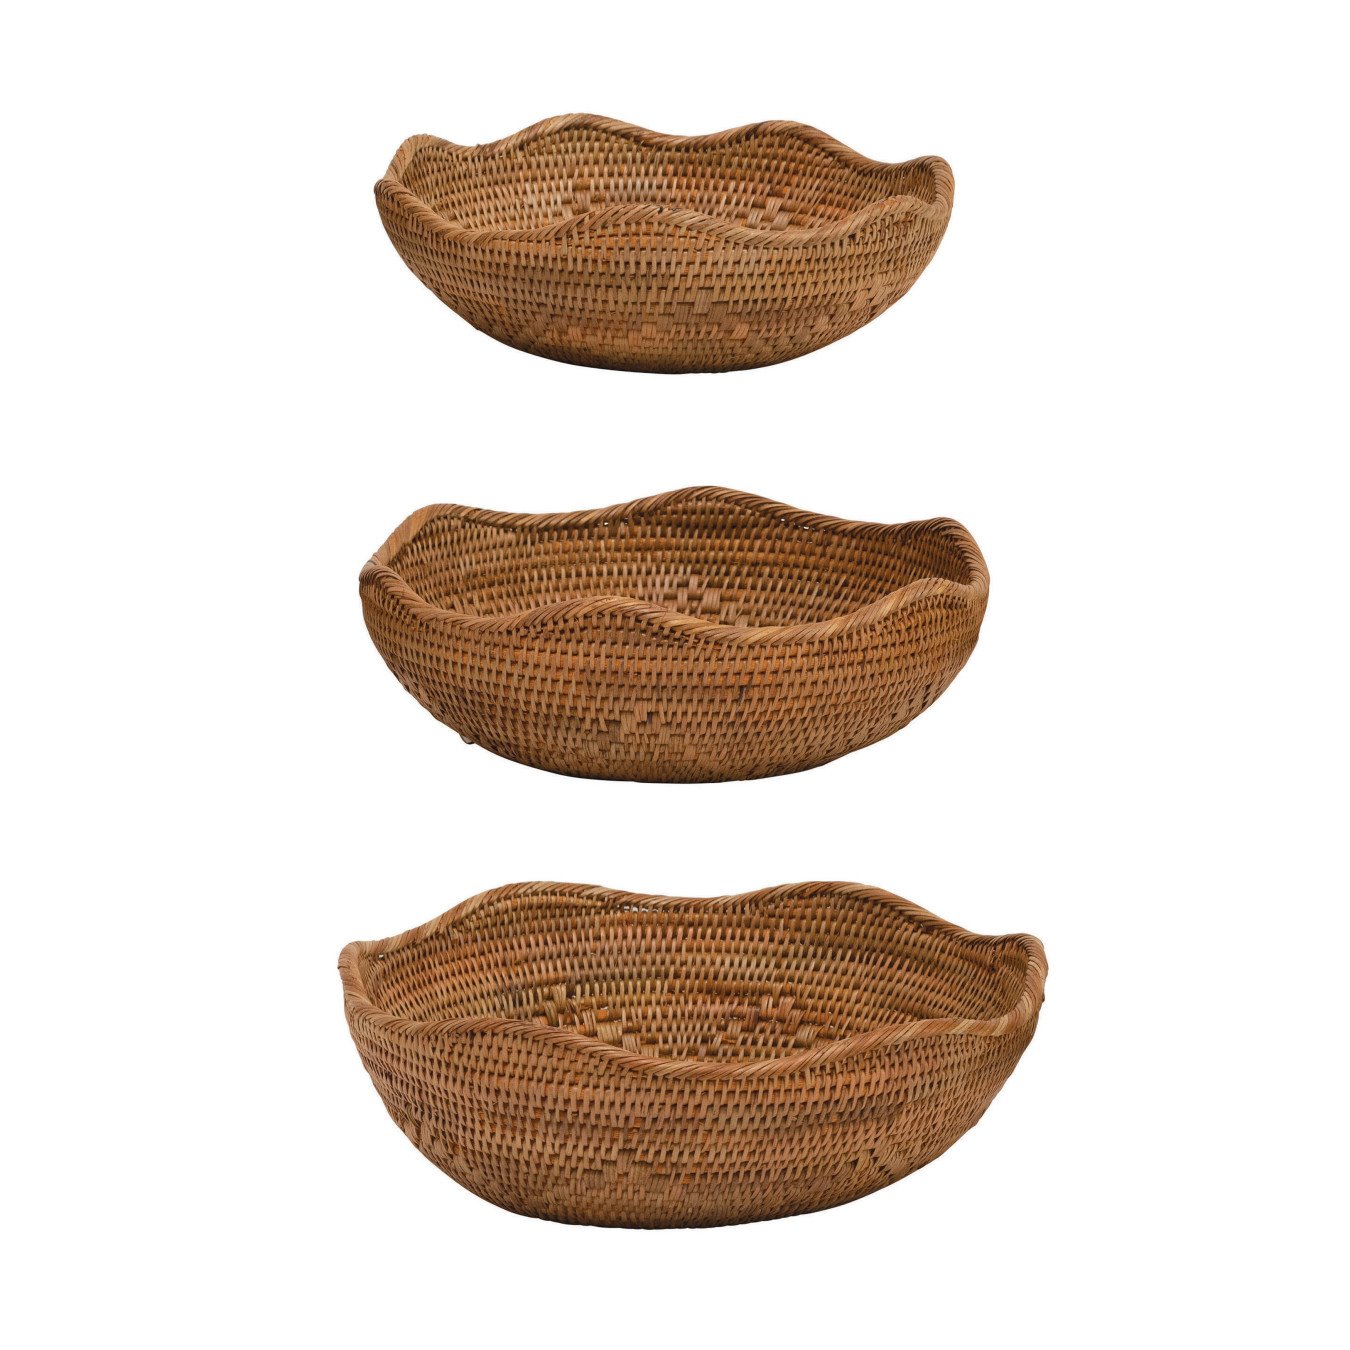 Decorative Hand-Woven Rattan Bowls, Set of 3